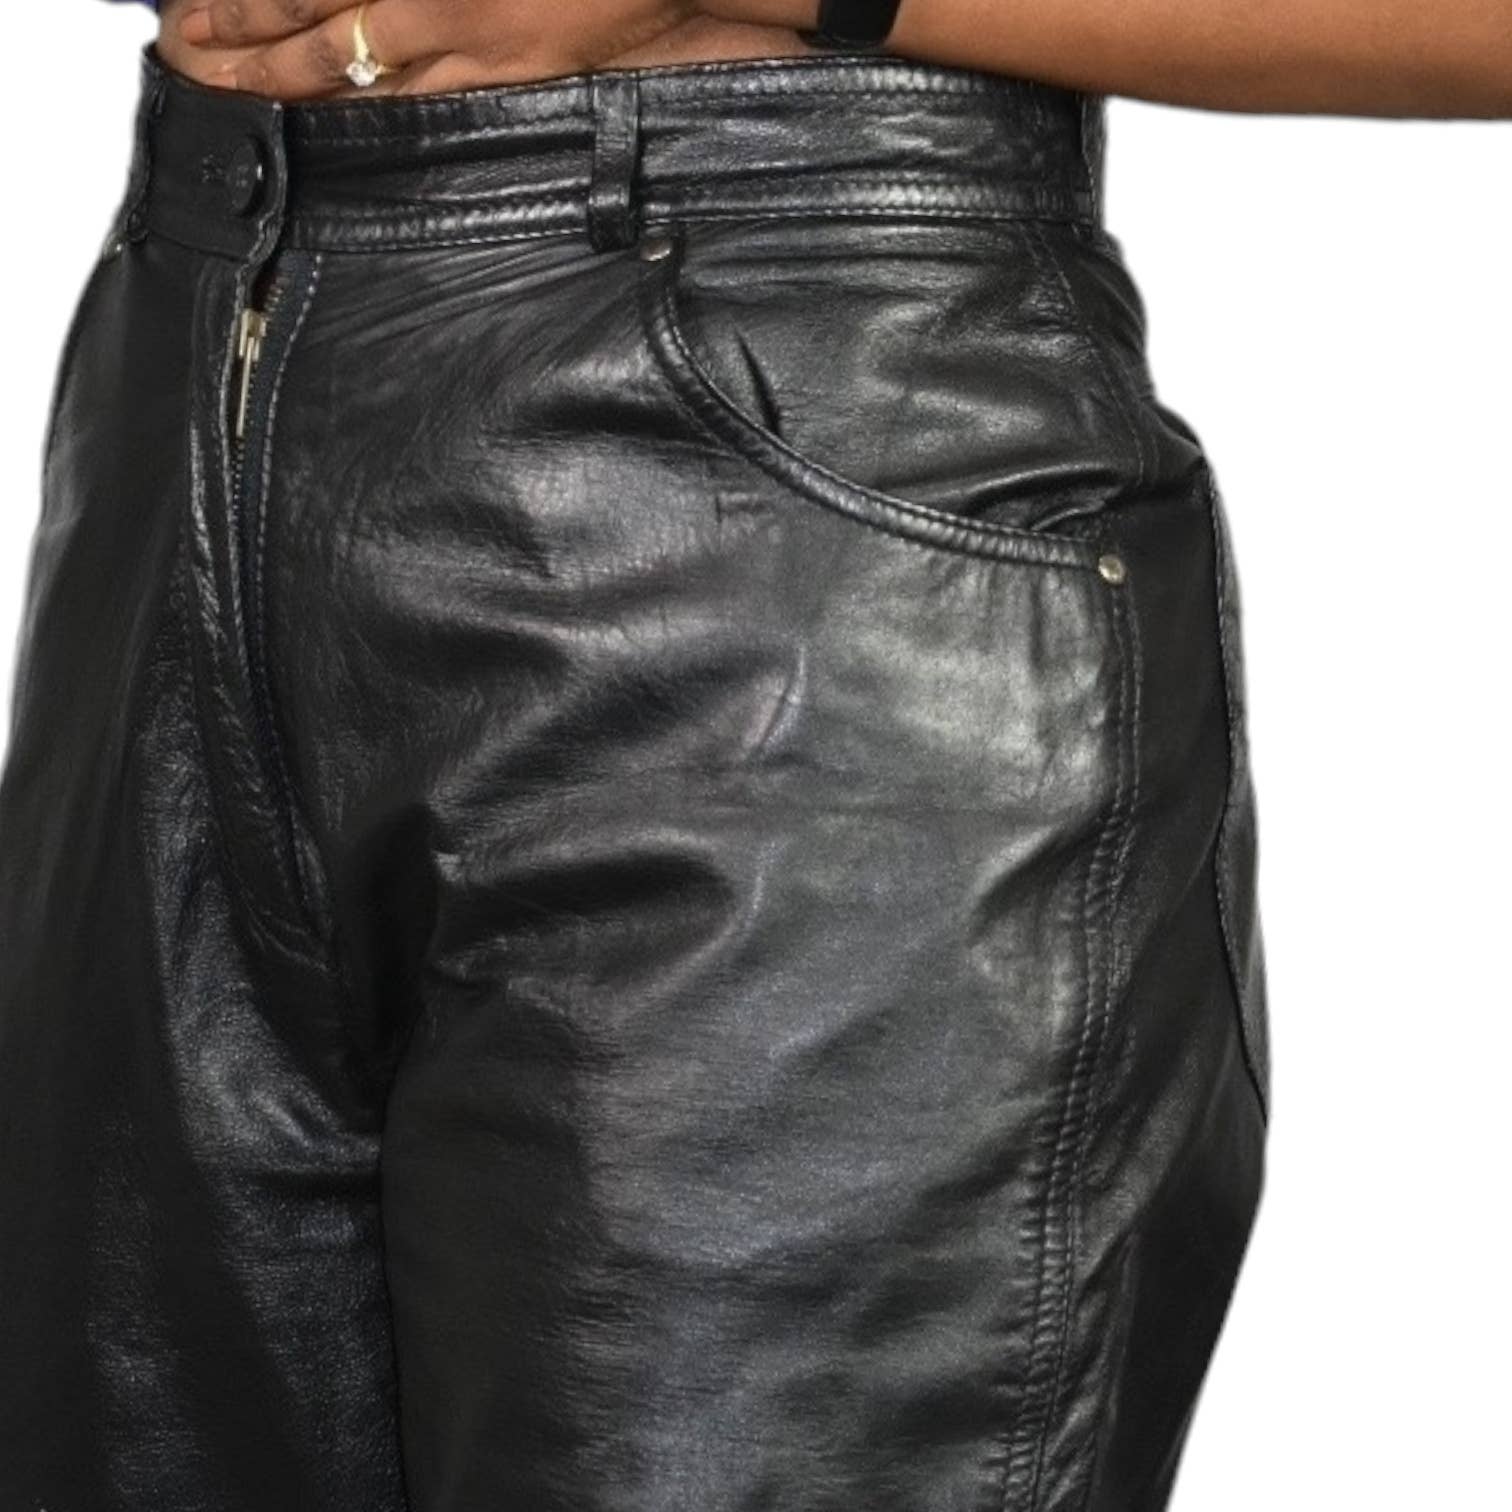 Vintage Wilsons Leather Pants Black Tapered High Waist Barrel Leg Classic Size 28 6